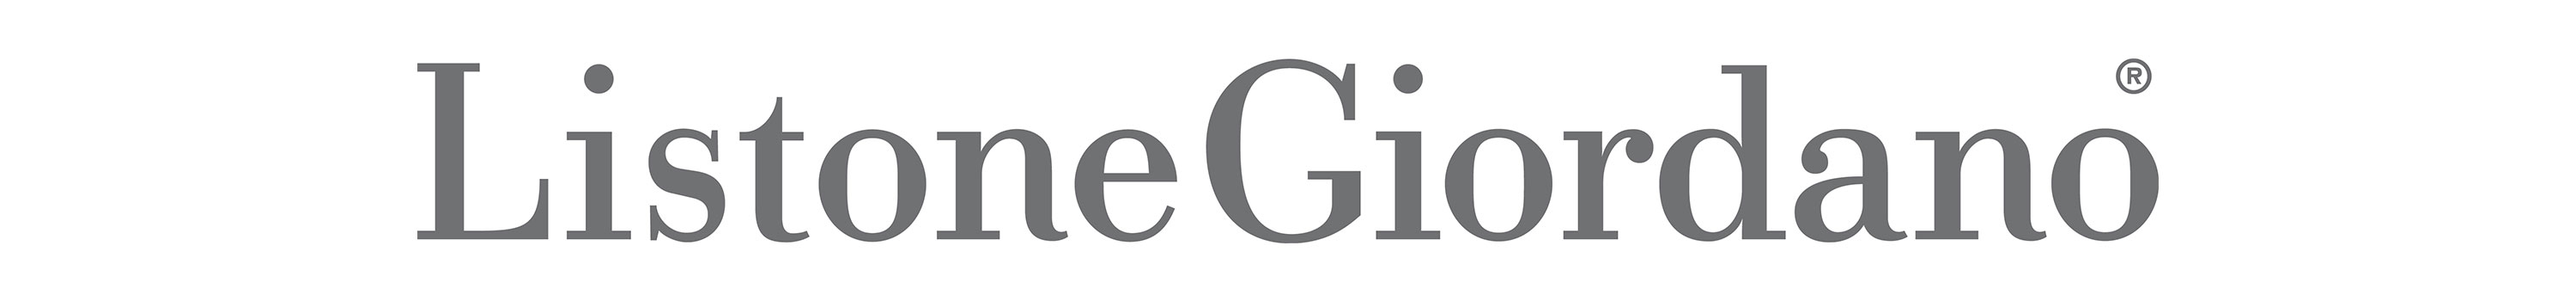 BISCUIT brand logo